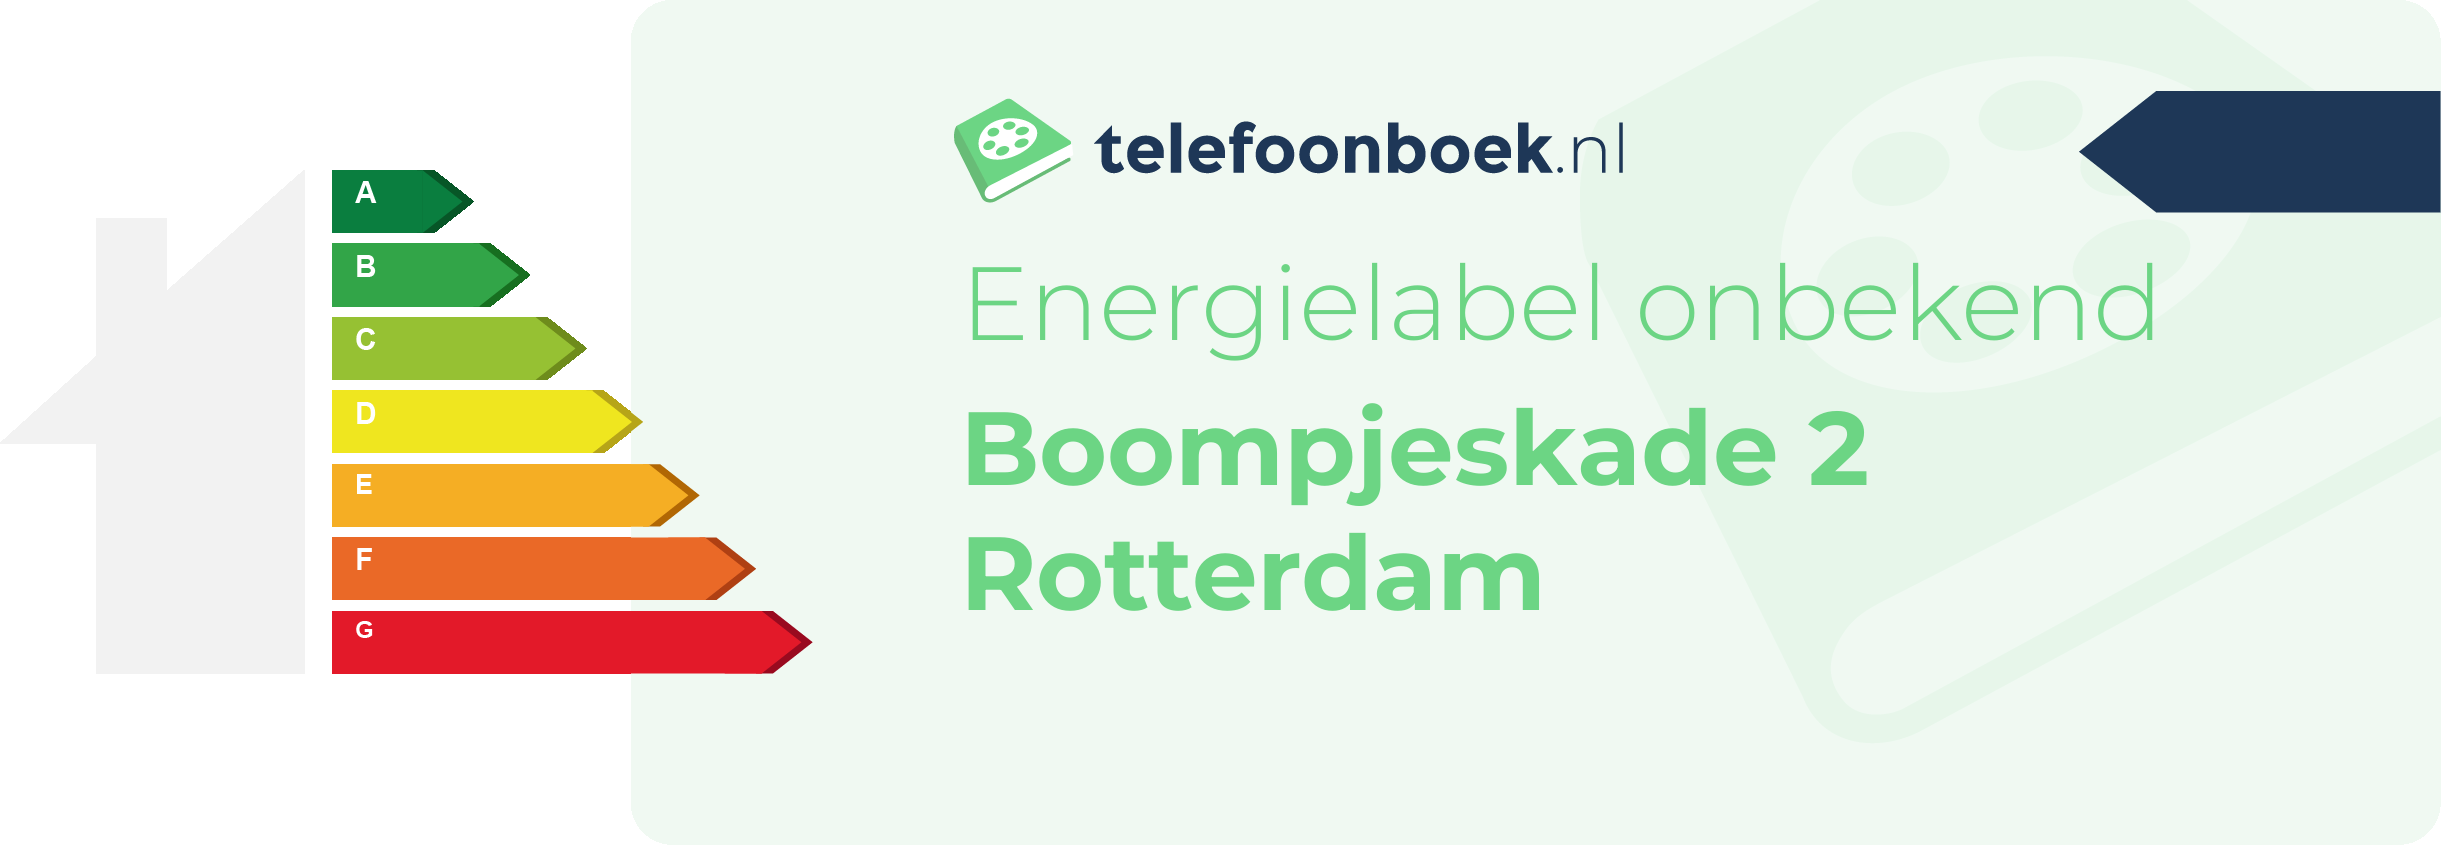 Energielabel Boompjeskade 2 Rotterdam